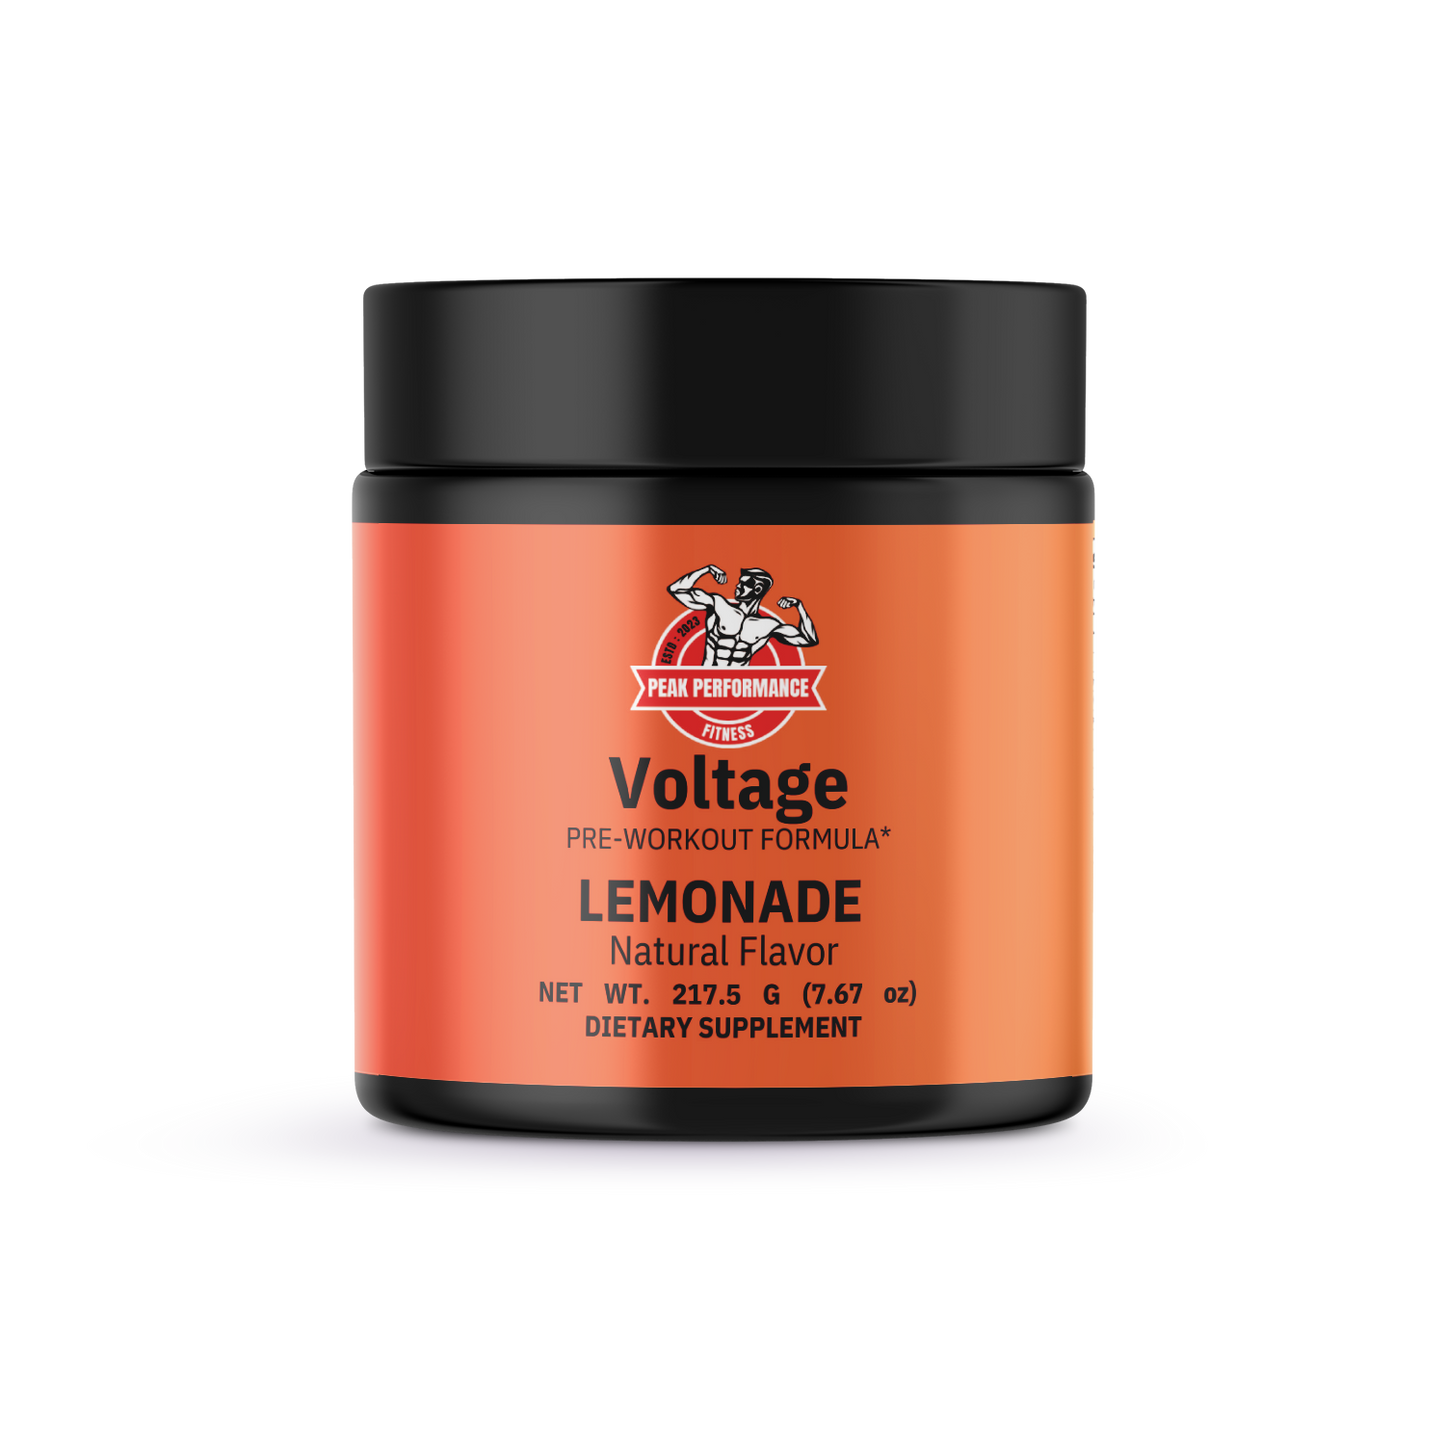 Voltage Pre-Workout Formula: Lemonade Flavor - Enhanced Energy and Focus